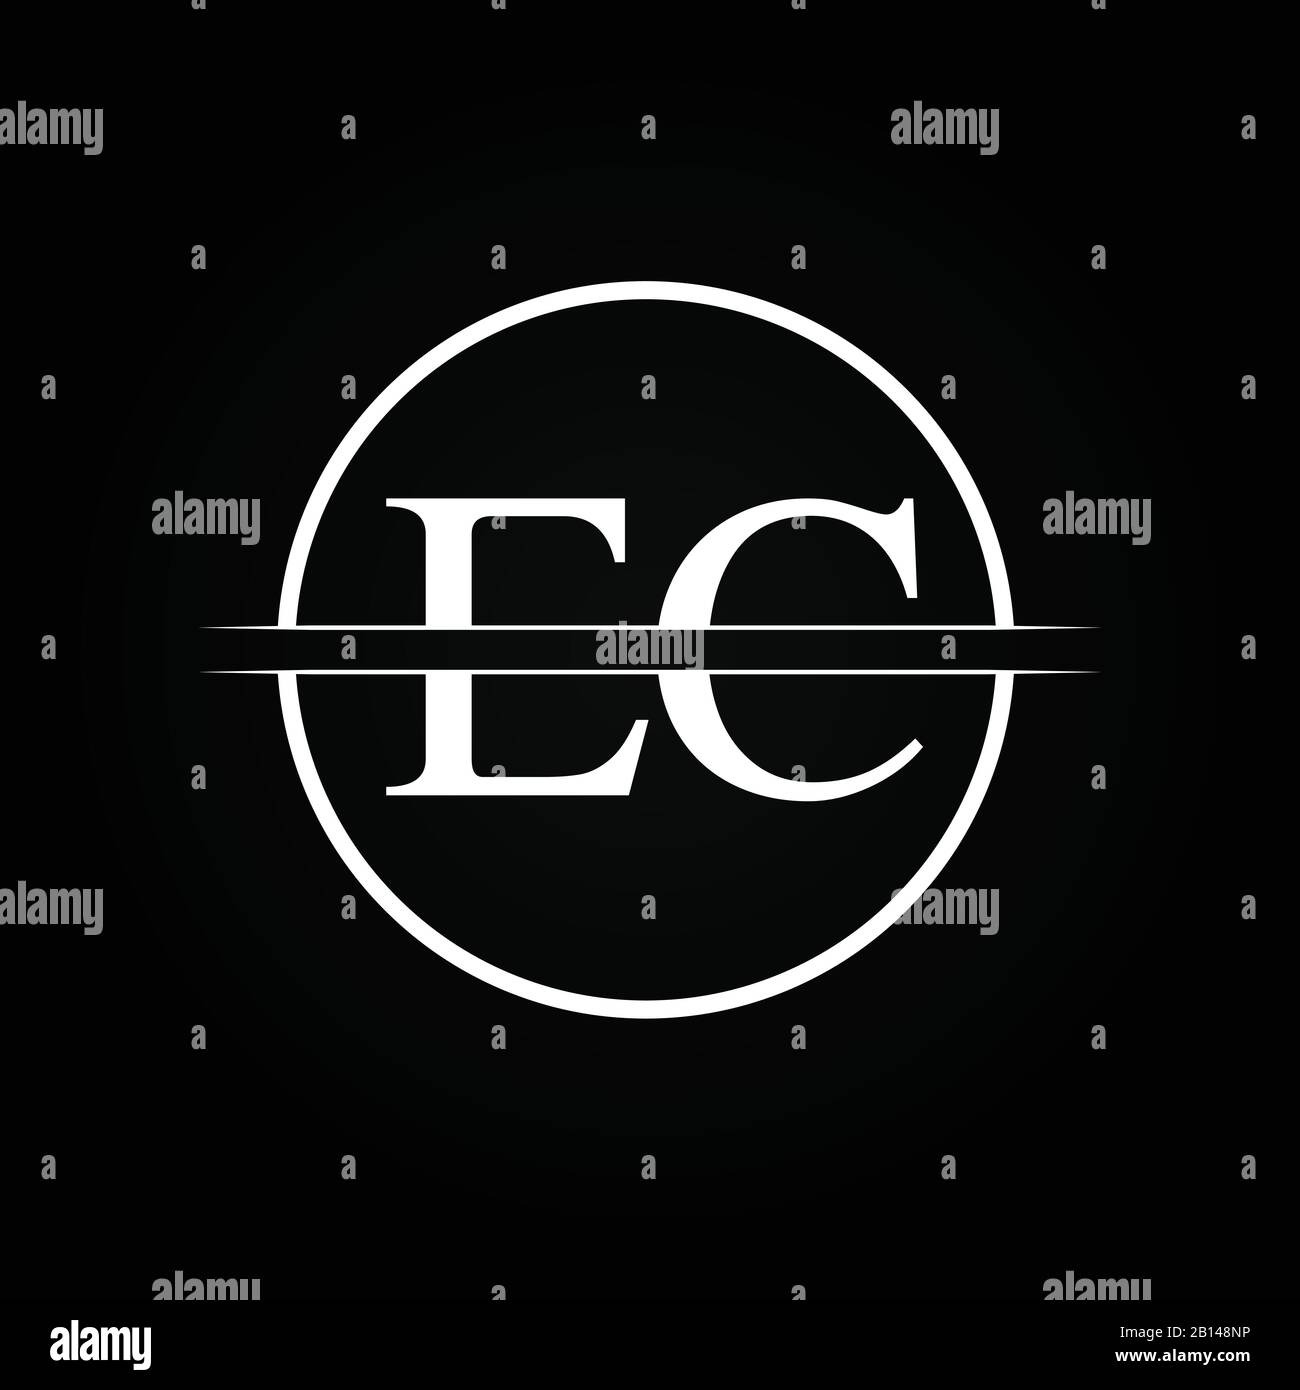 Initial EC Letter Linked Logo Business Vector Template. Creative Letter EC Logo Design Stock Vector